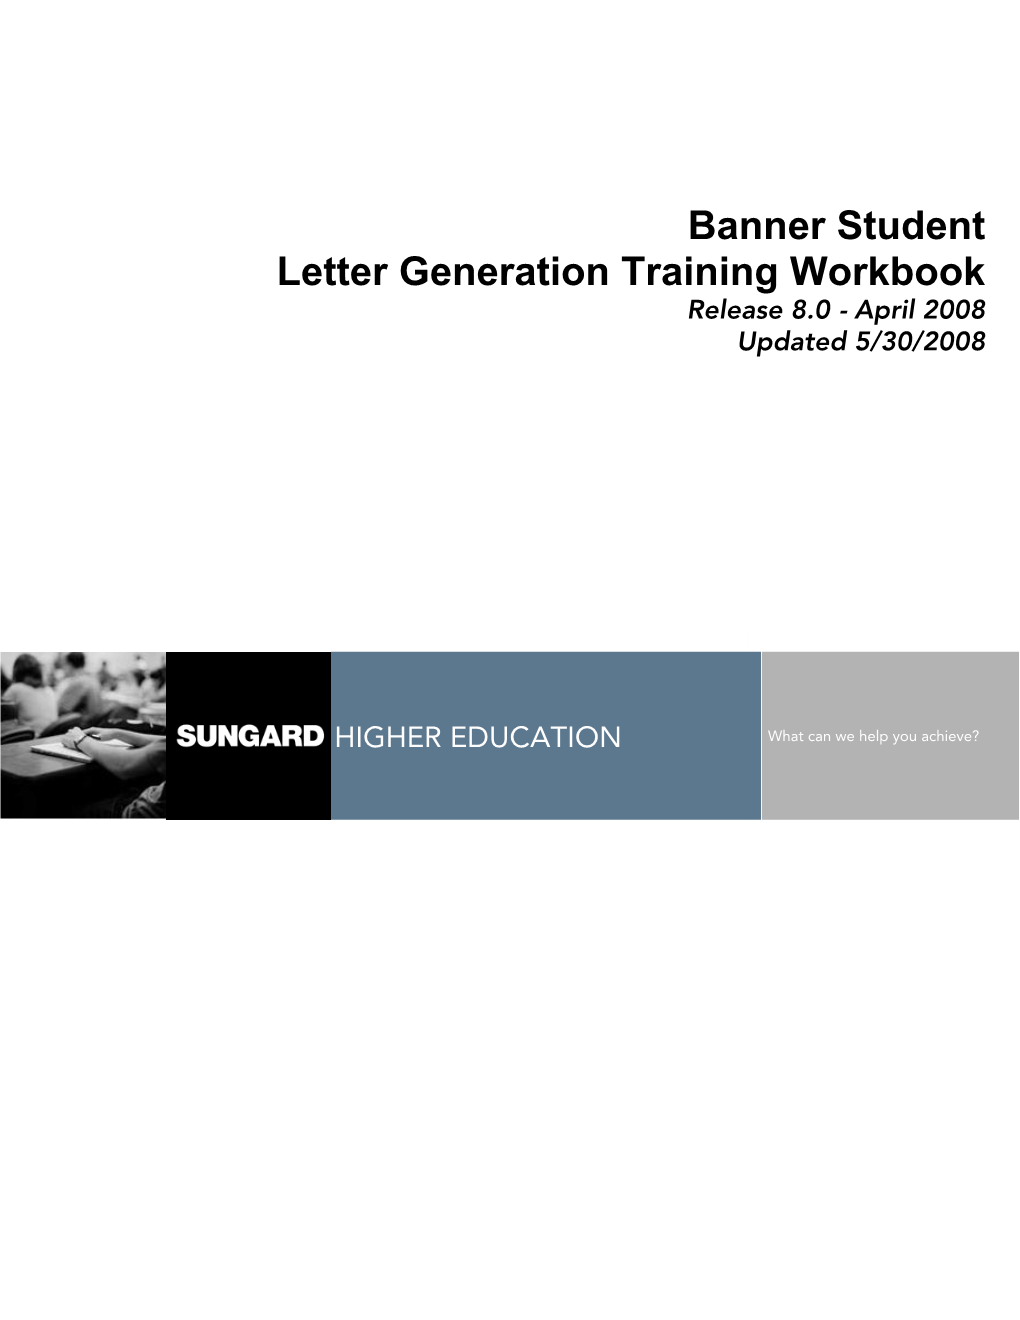 Banner Student Letter Generation Training Workbook Release 8.0 - April 2008 Updated 5/30/2008